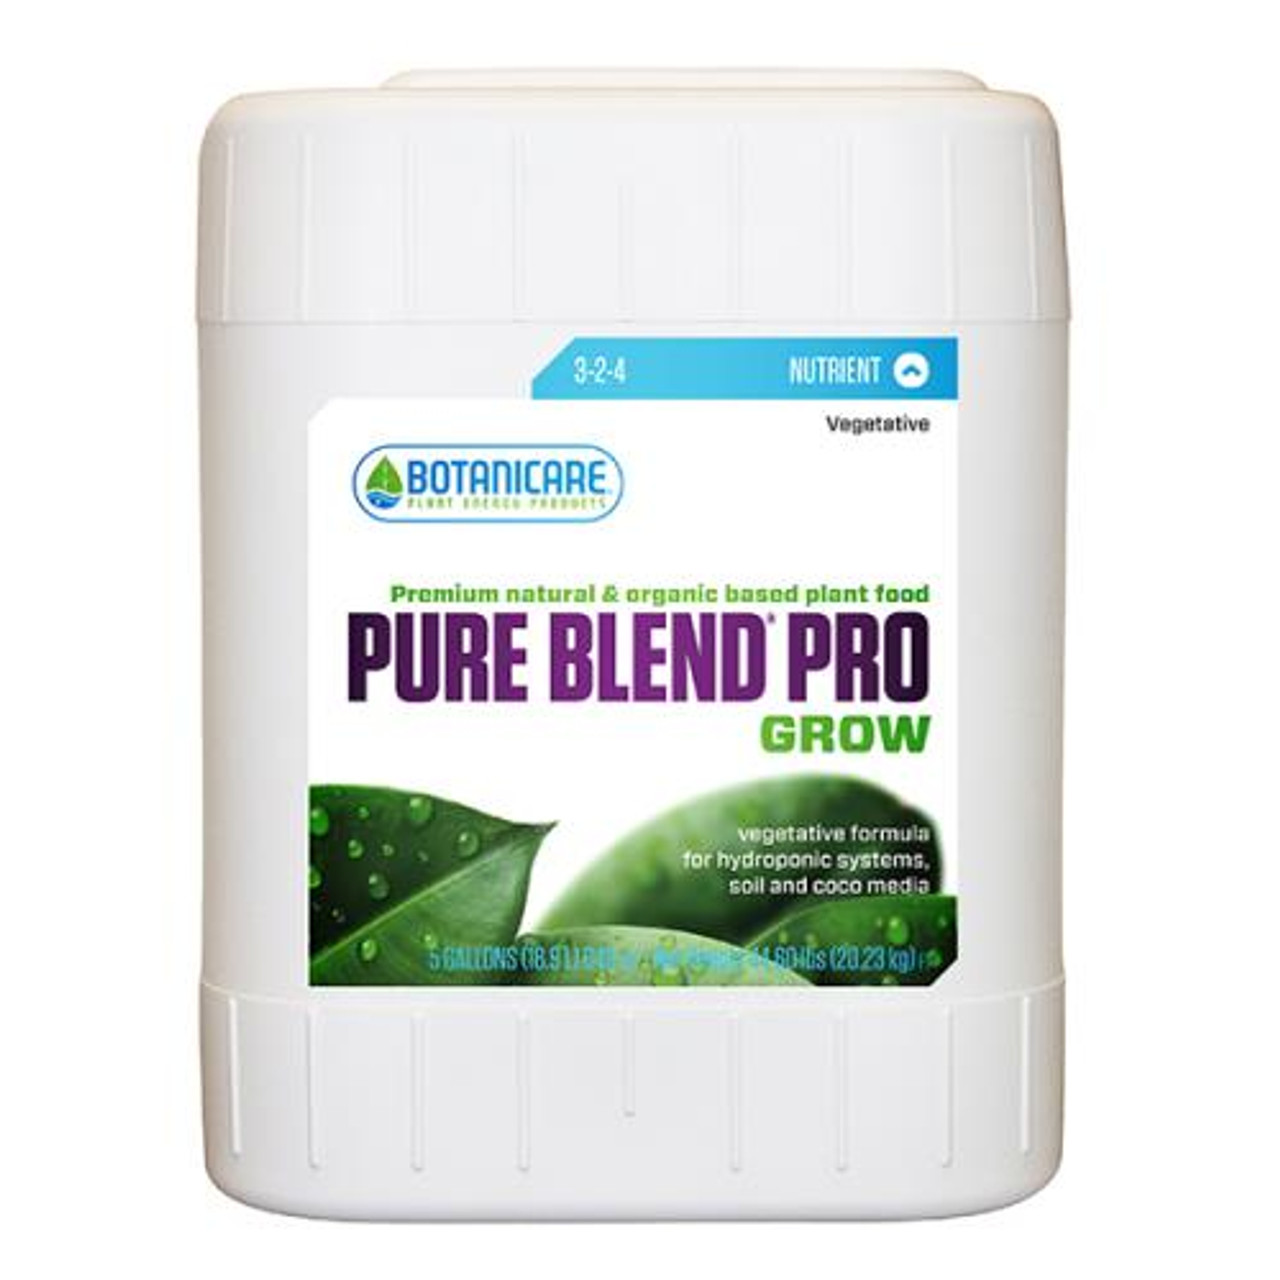 Botanicare Pure Blend Pro Grow SOIL / HYDRO 3-2-4